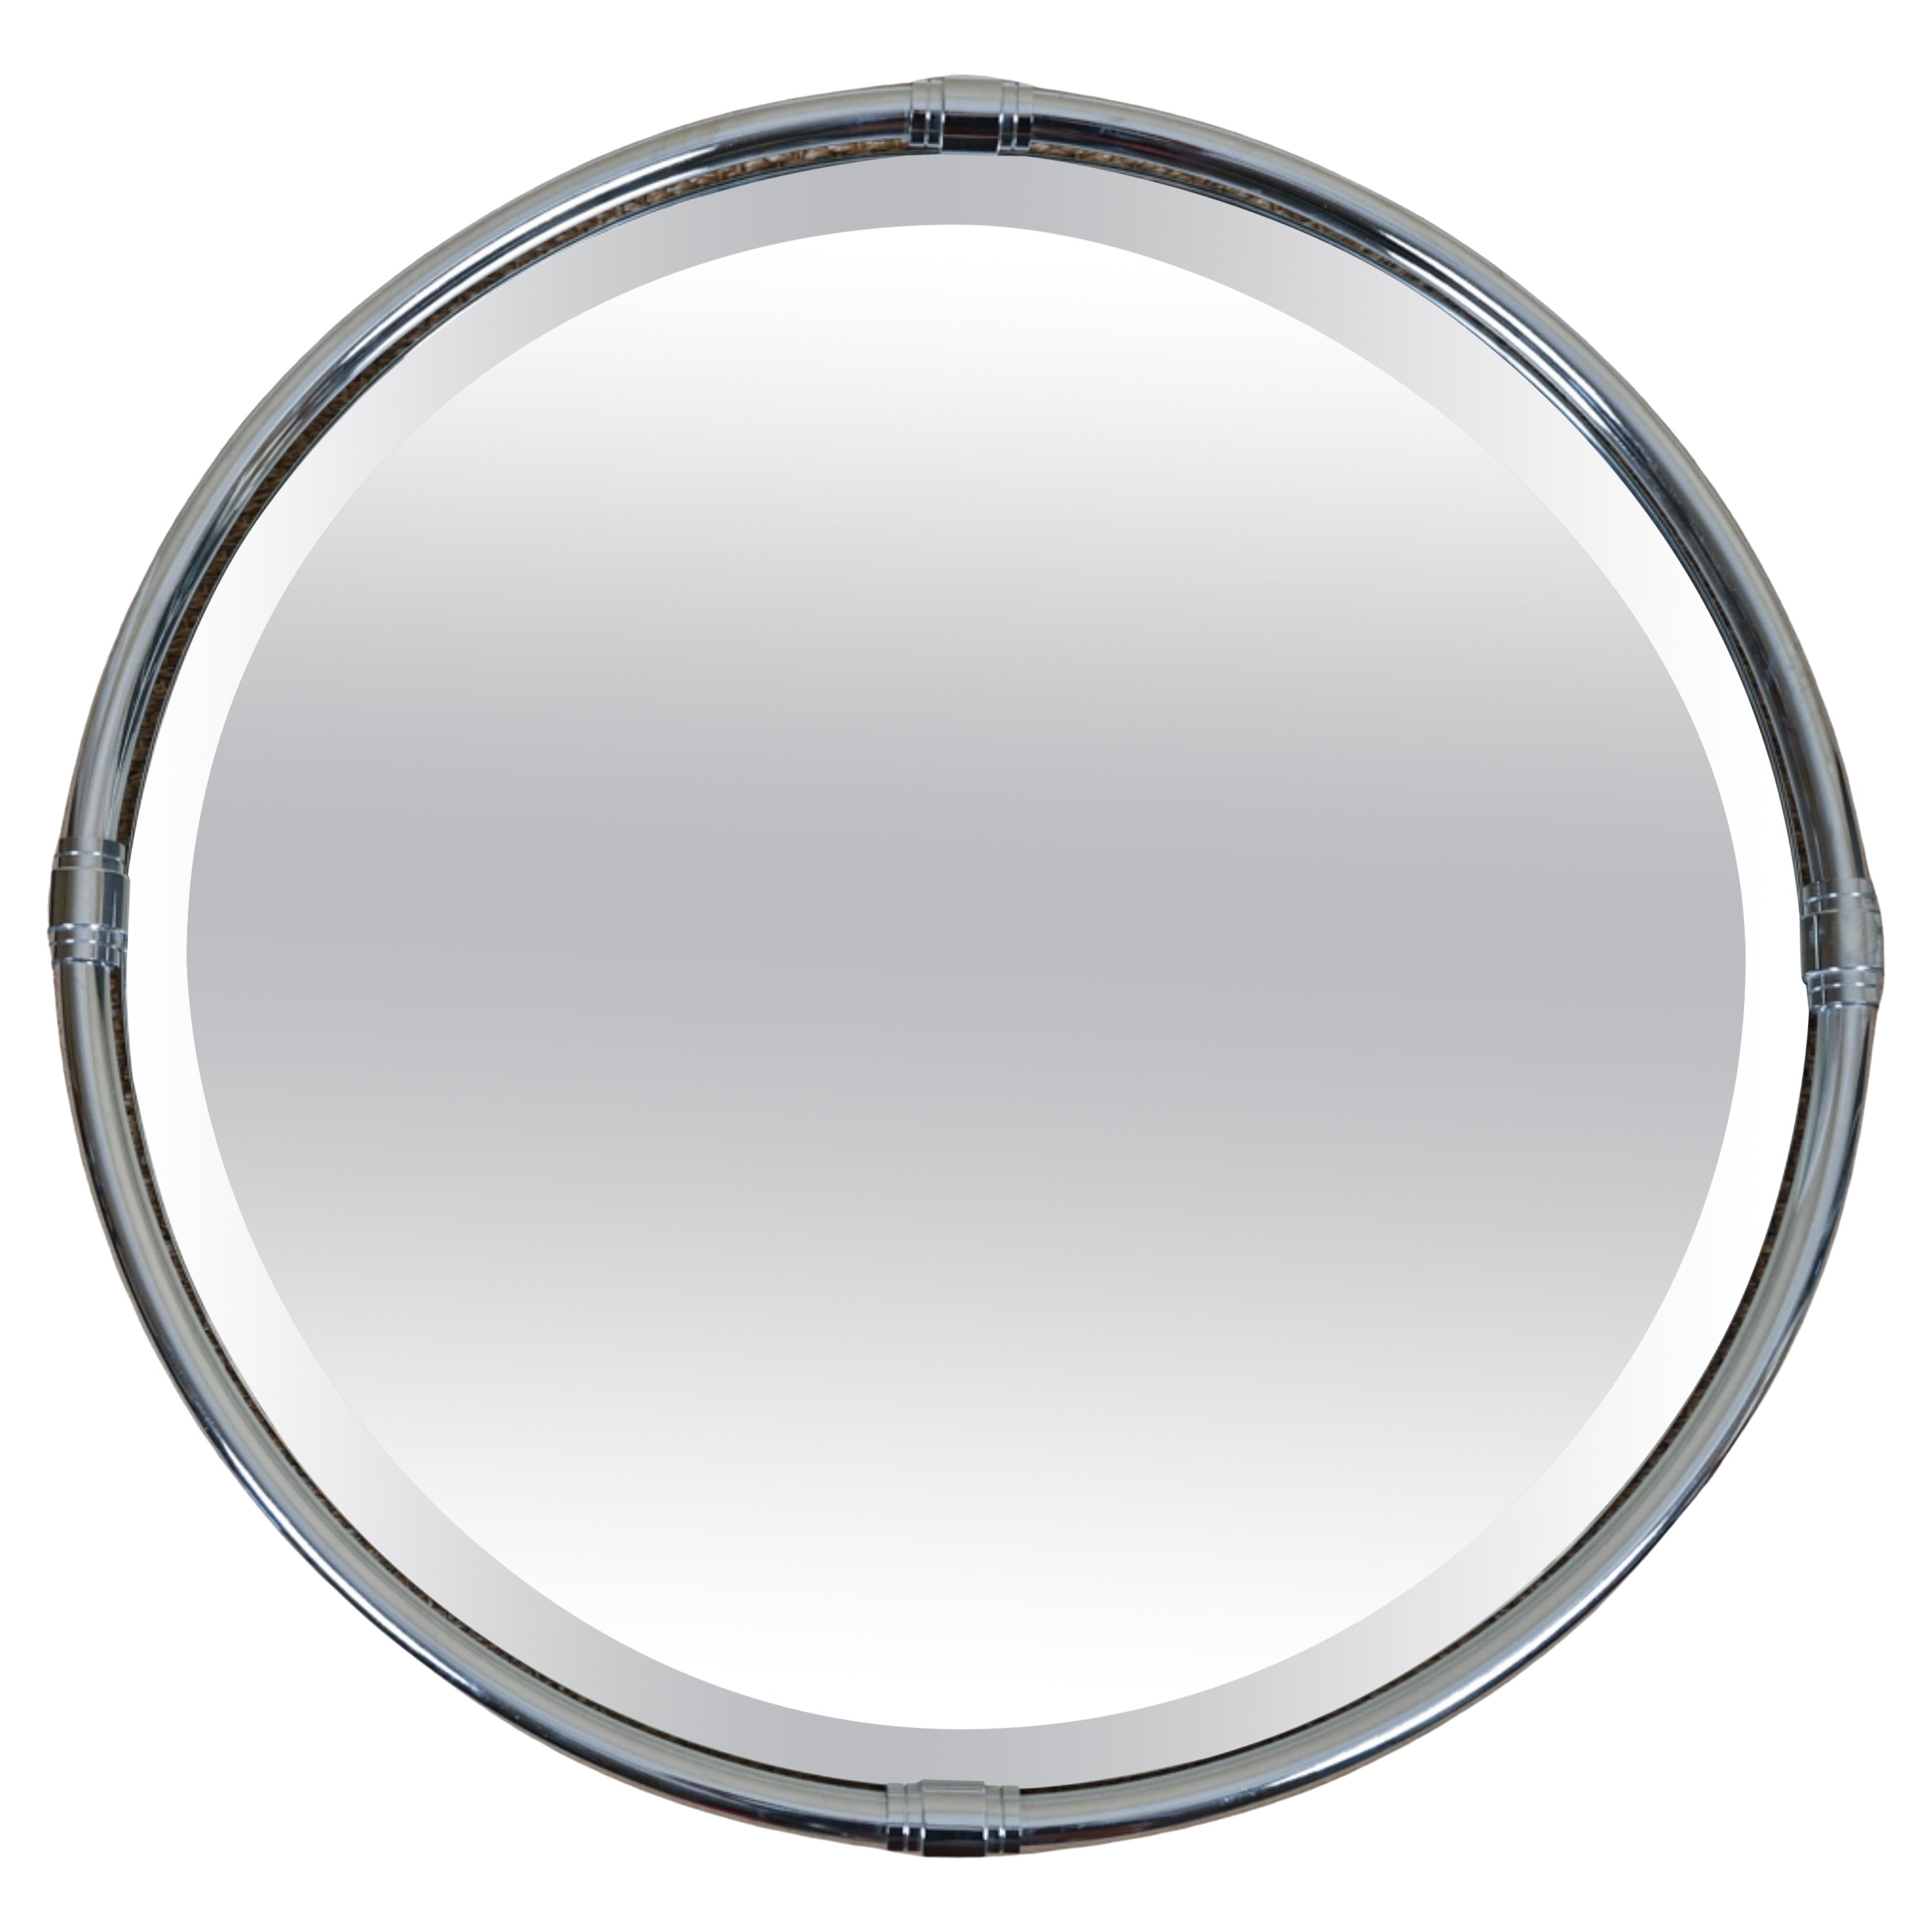 Machine Age-Style Contemporary Round Chrome Frame Mirror